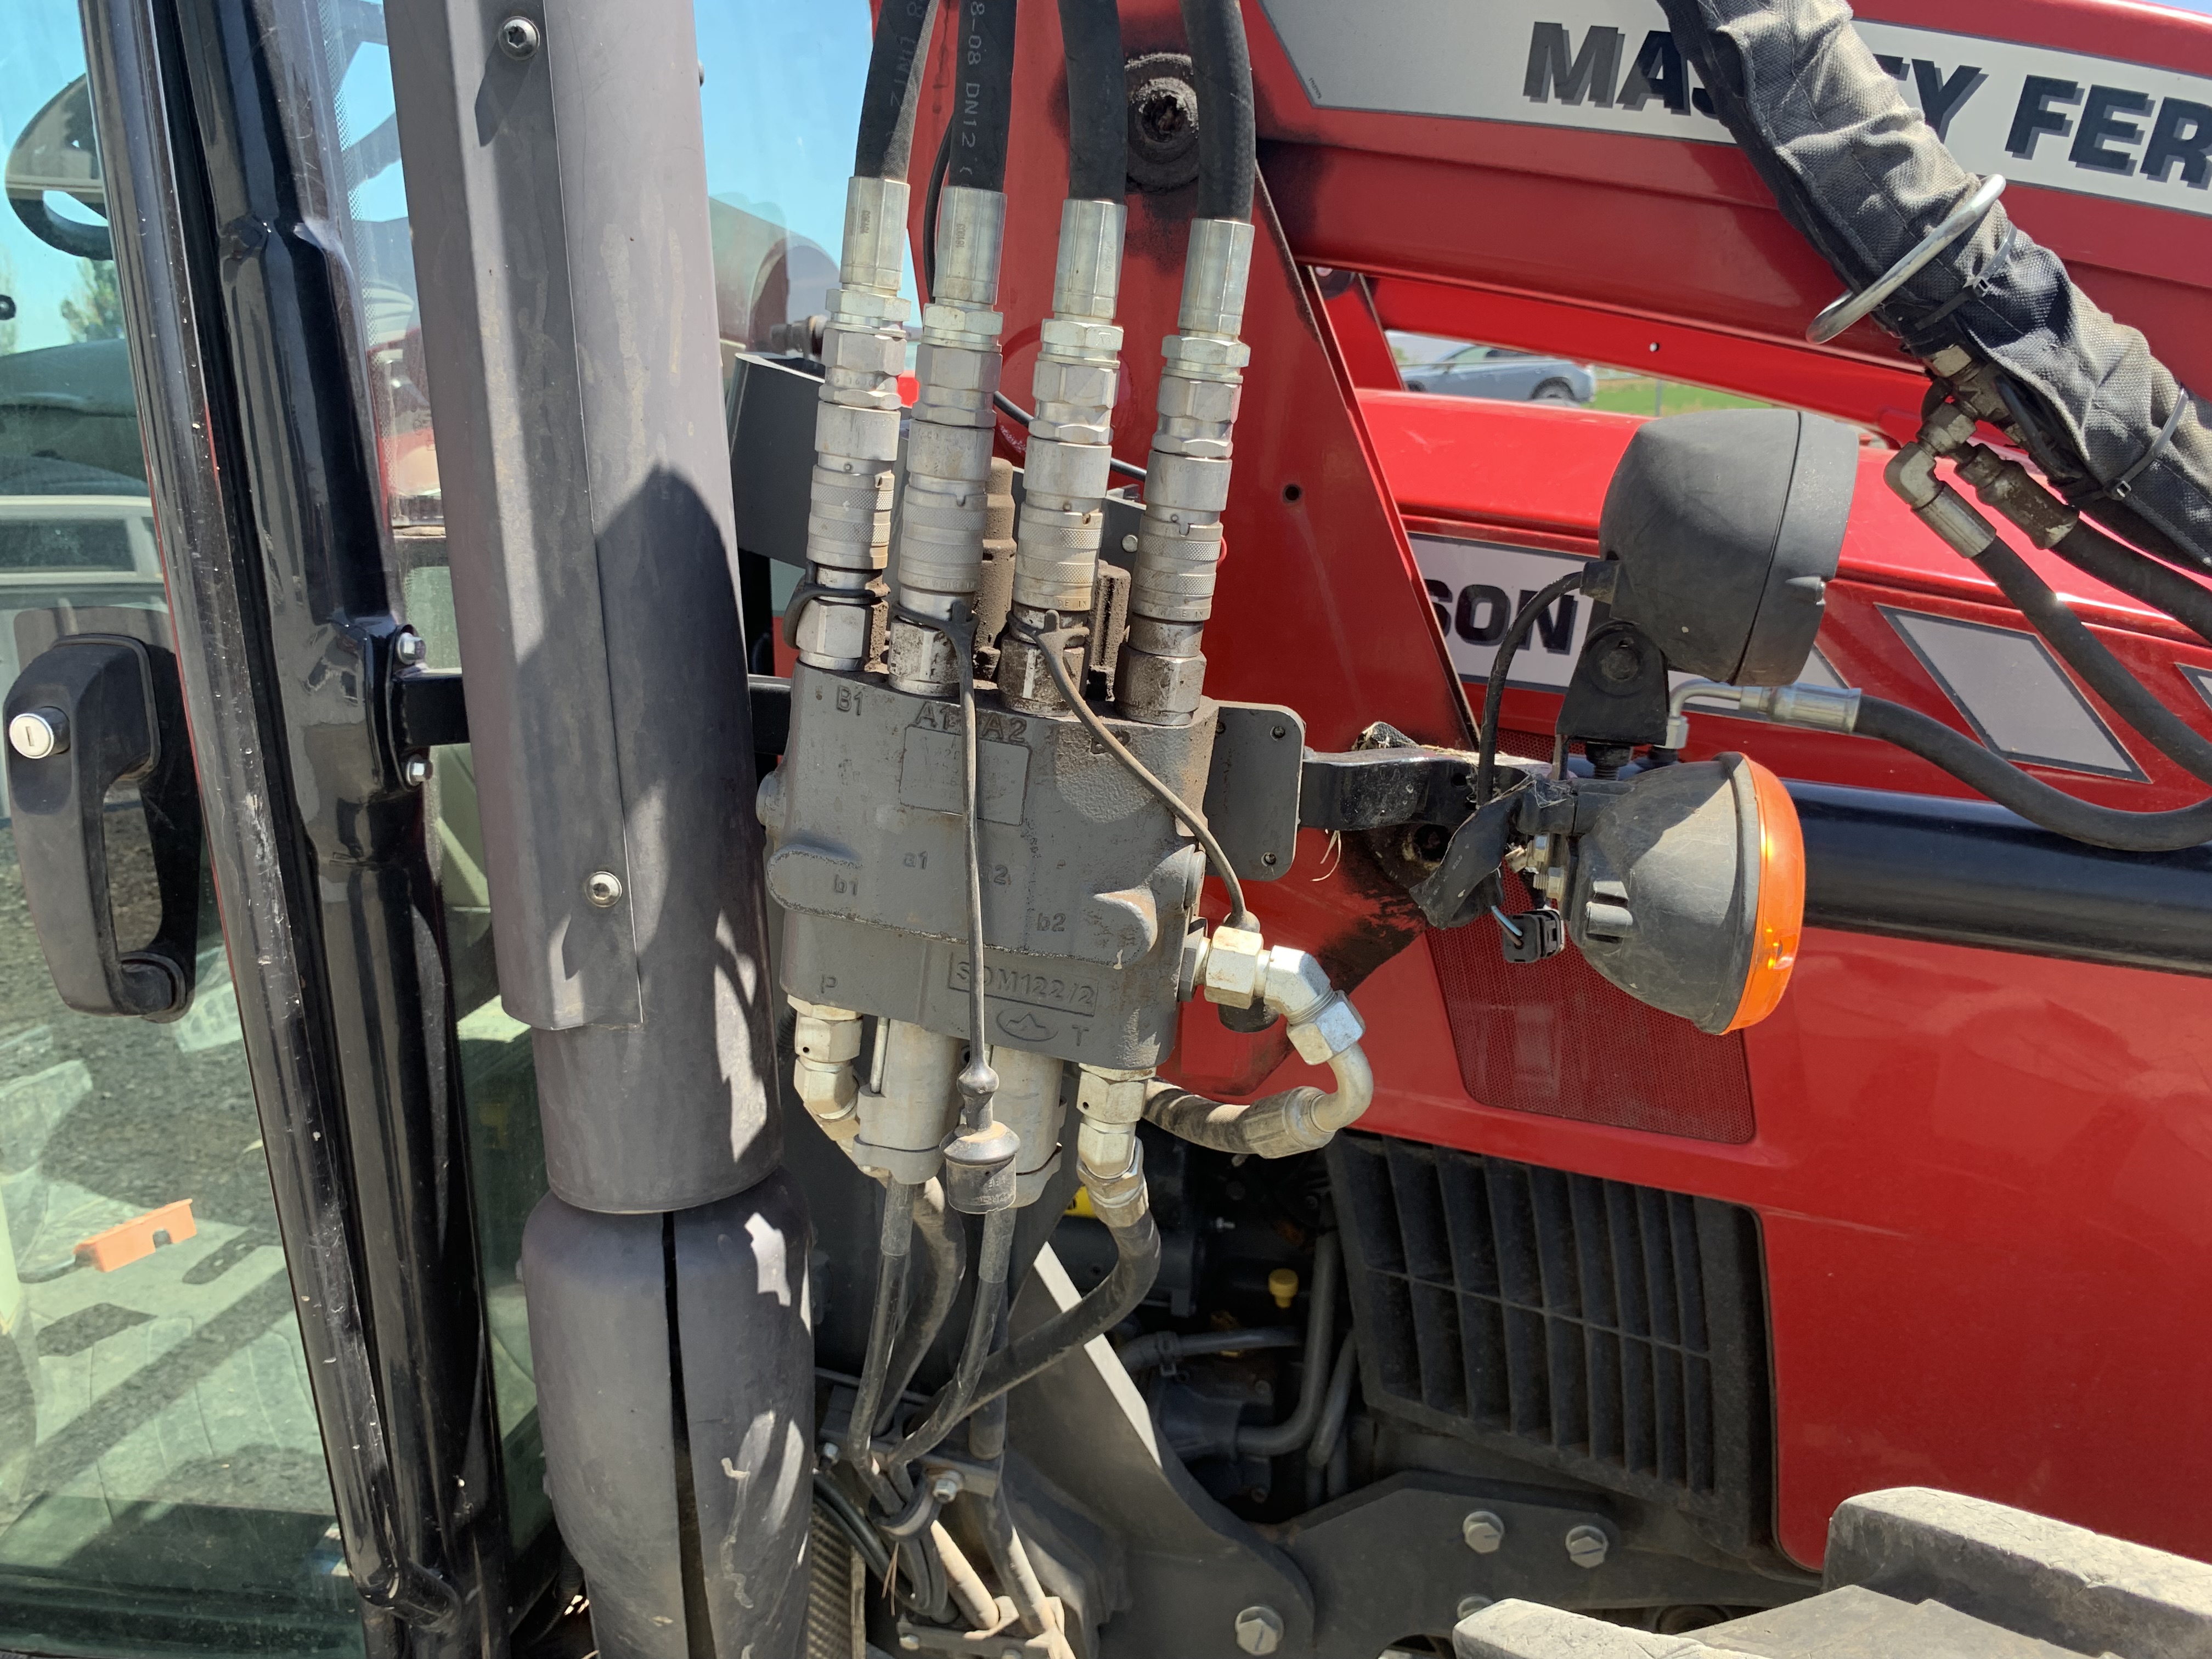 2019 Massey Ferguson 4709 Tractor